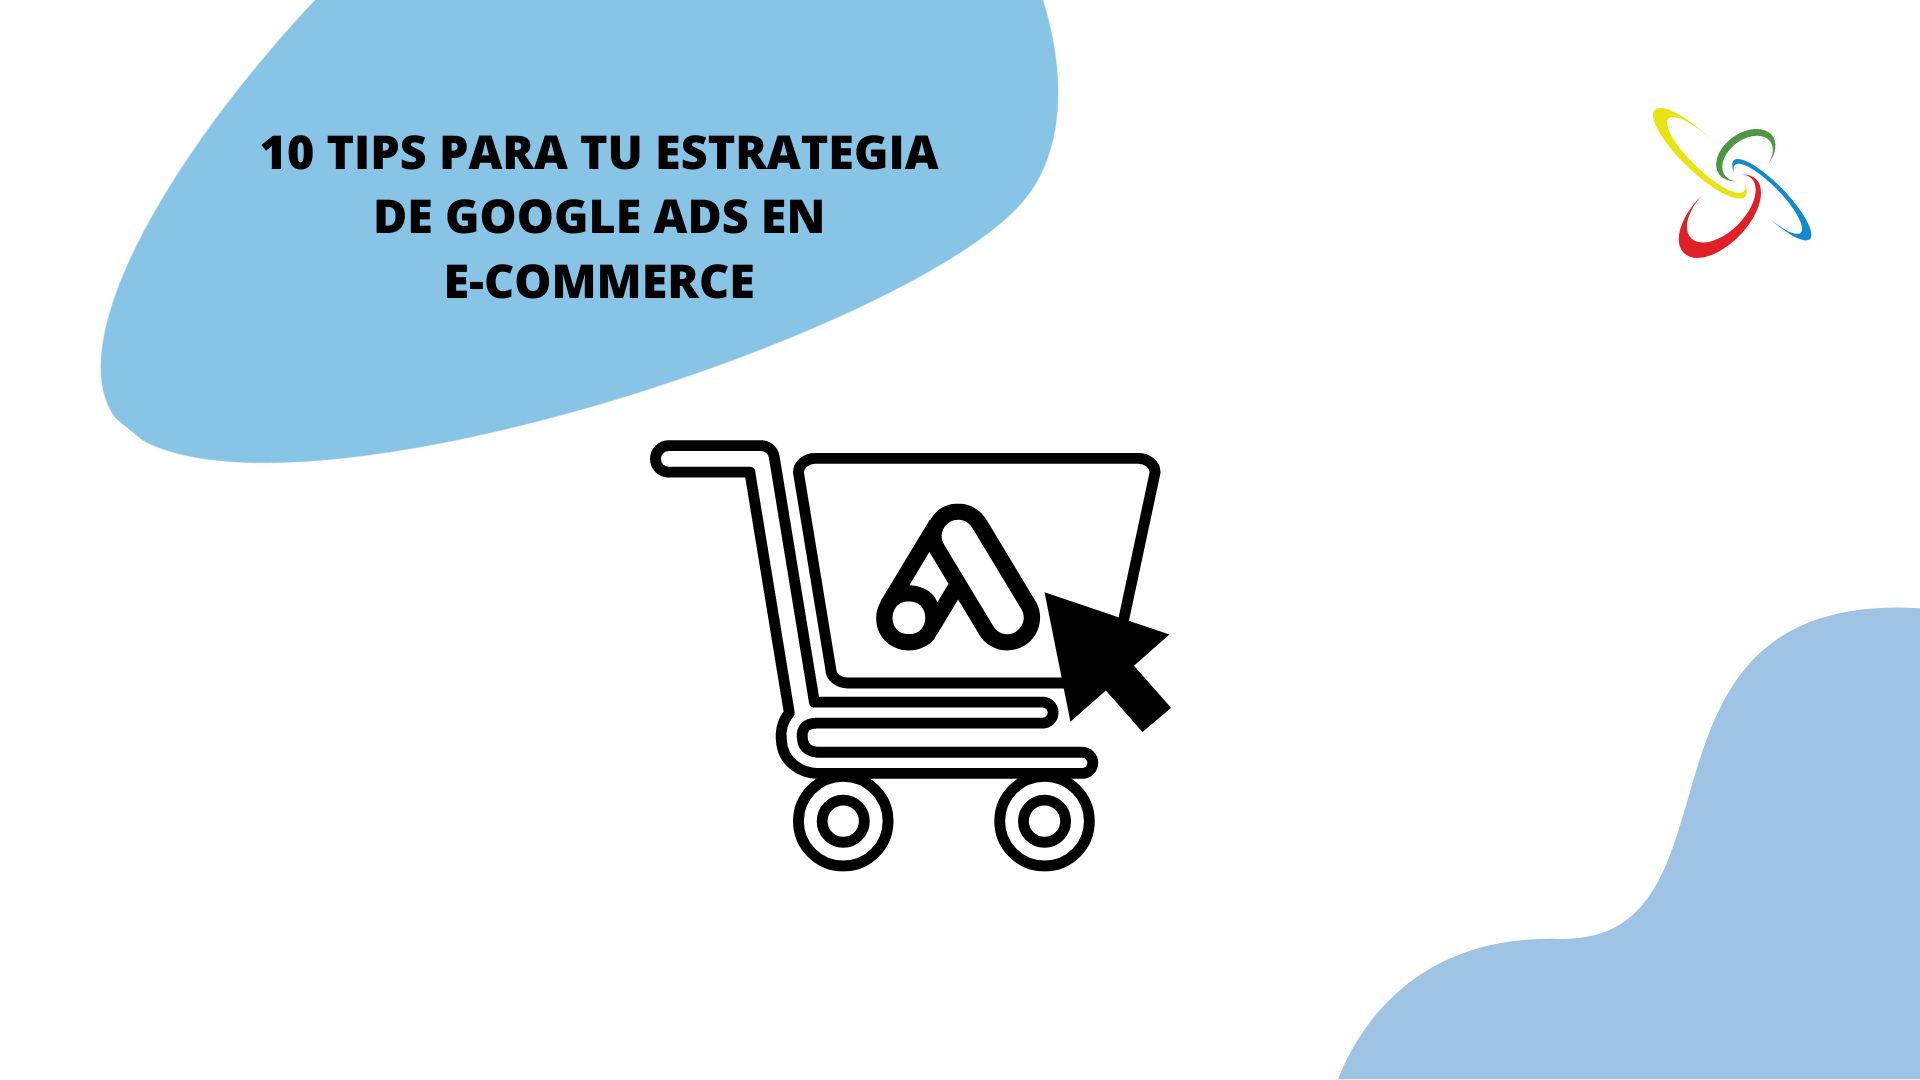 10 tips para tu estrategia de Google Ads en e-commerce